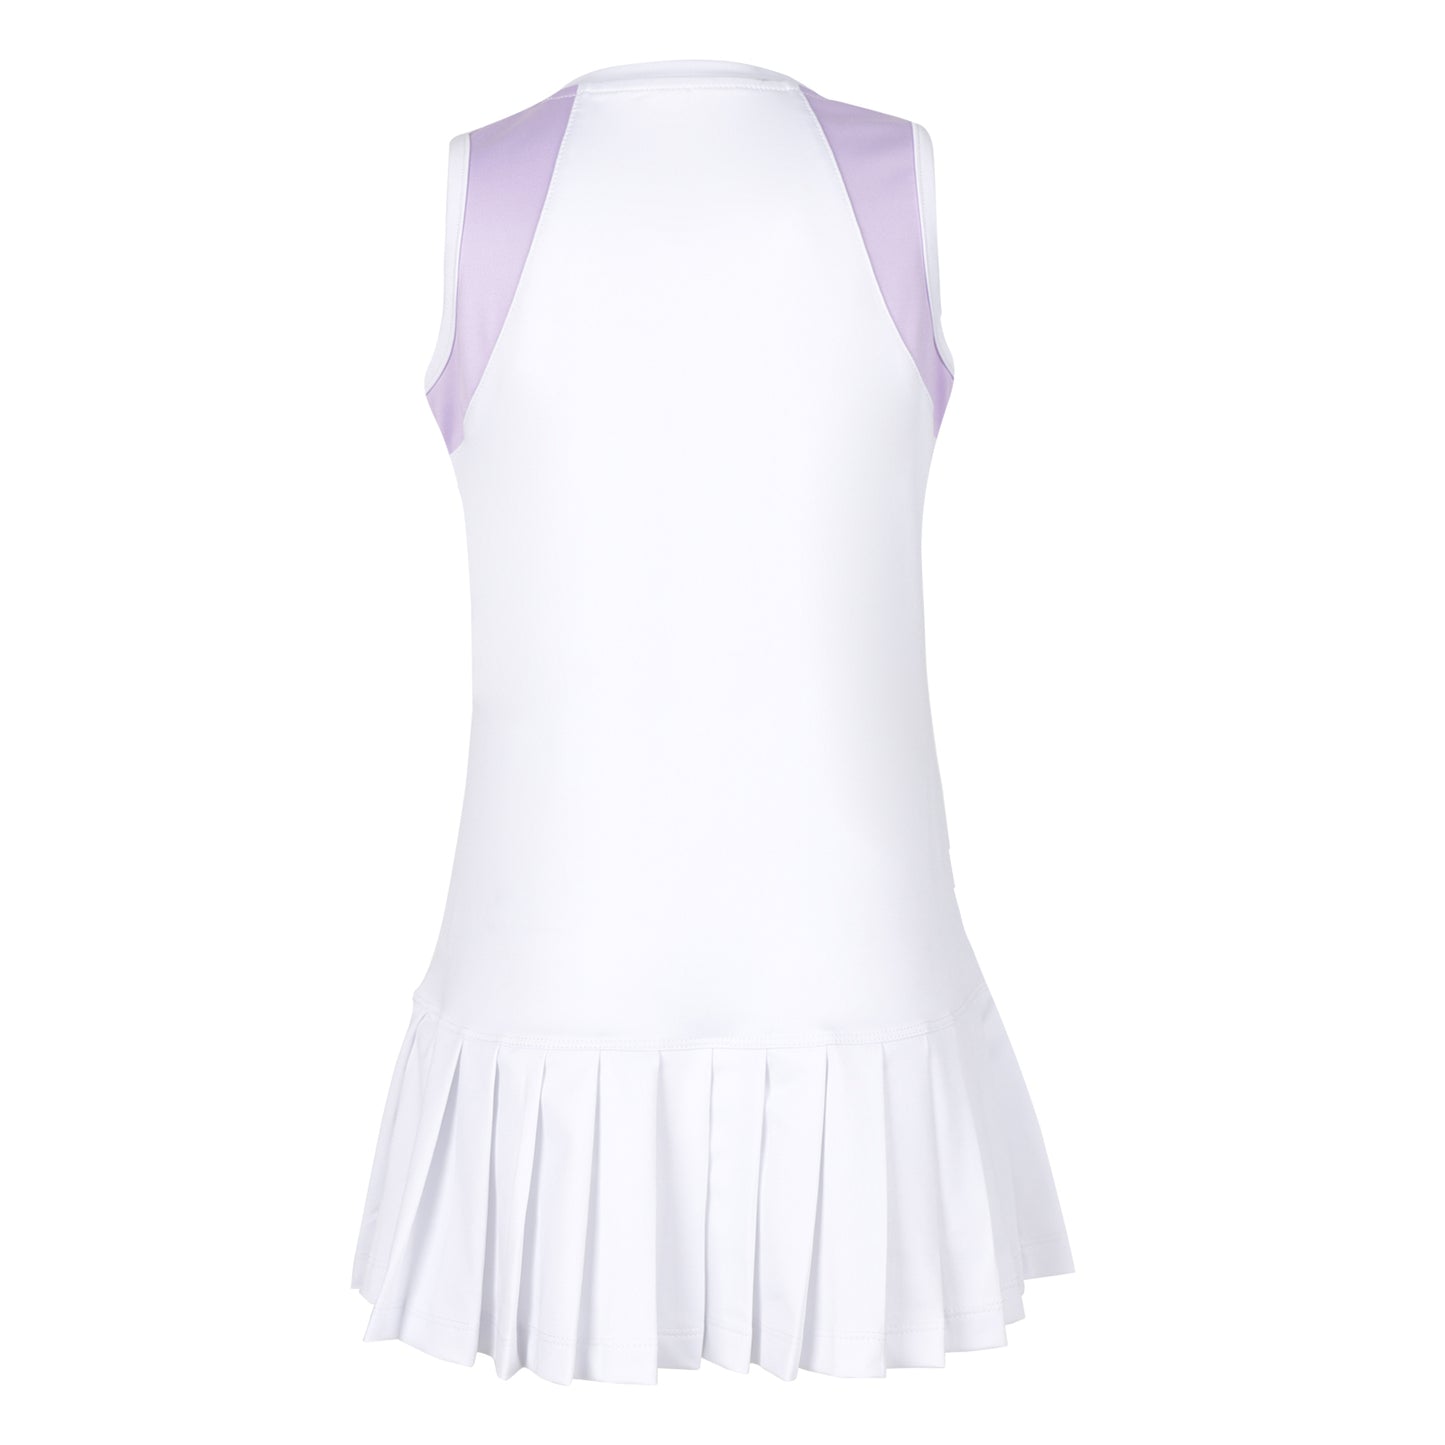 #Pansies in Paris White Pleat Dress - New!